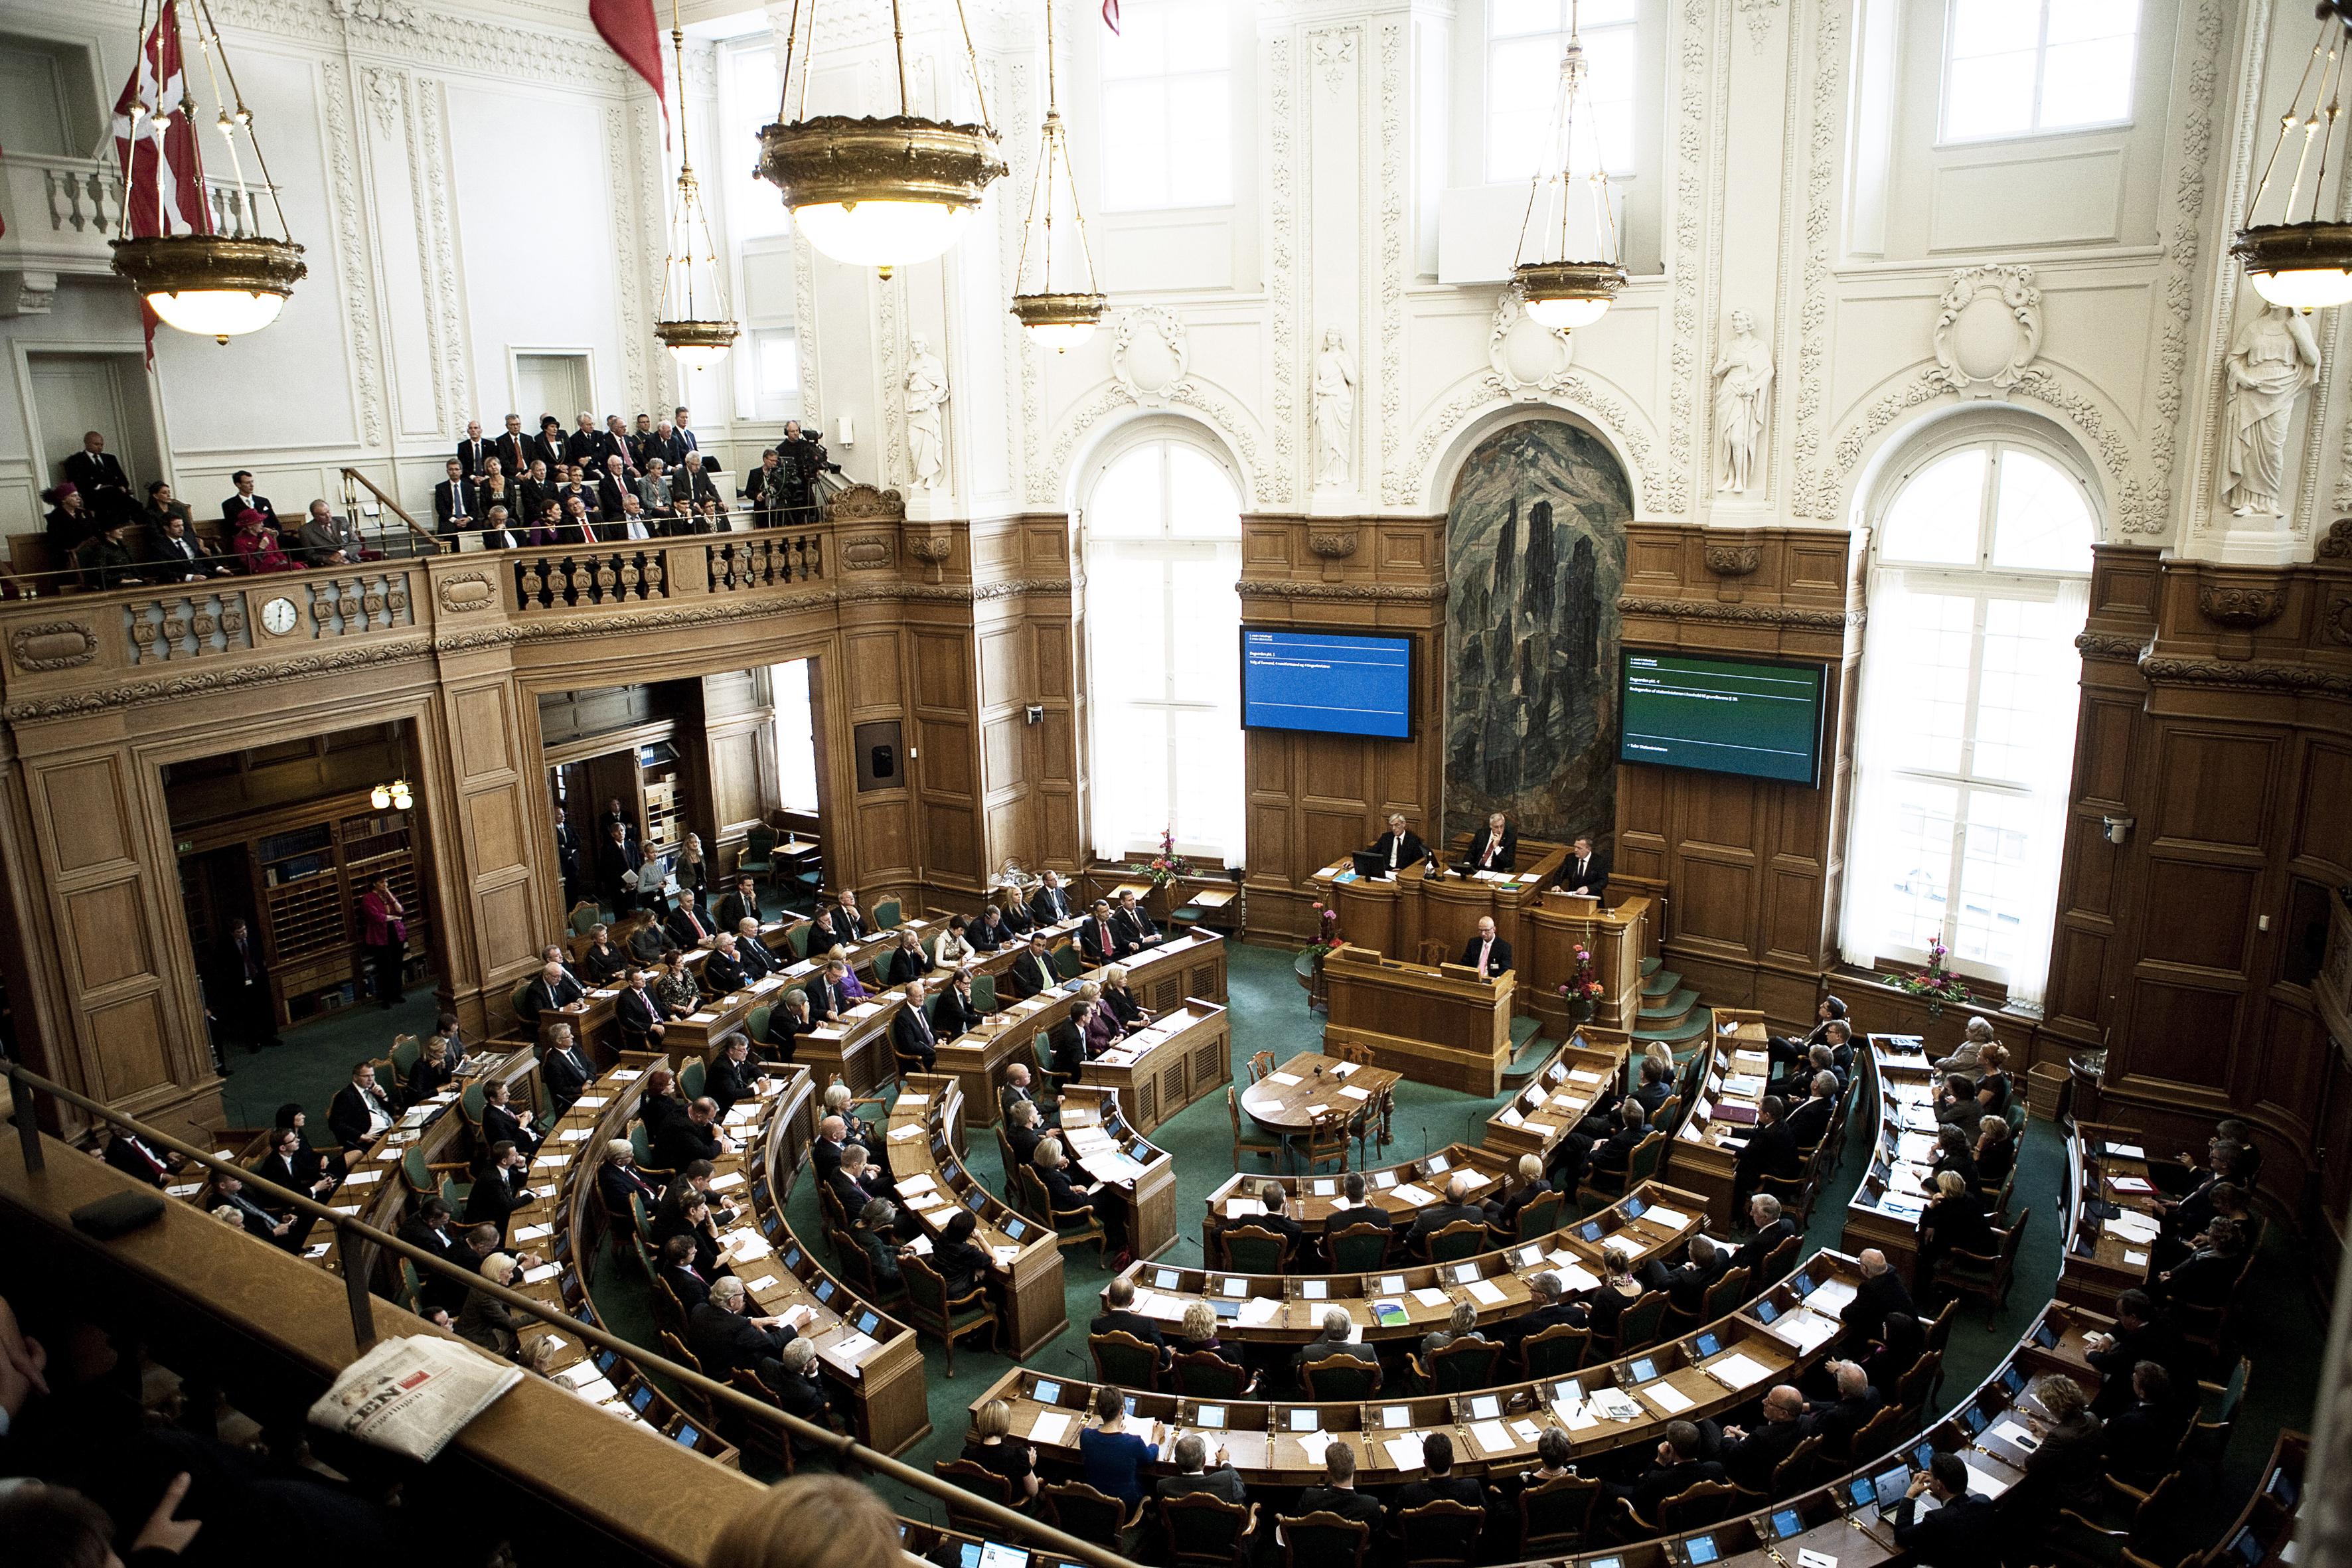 Партия представлена в парламенте страны. Фолькетинг в Дании. Копенгаген парламент. Парламент Дании. Правительство Дании.